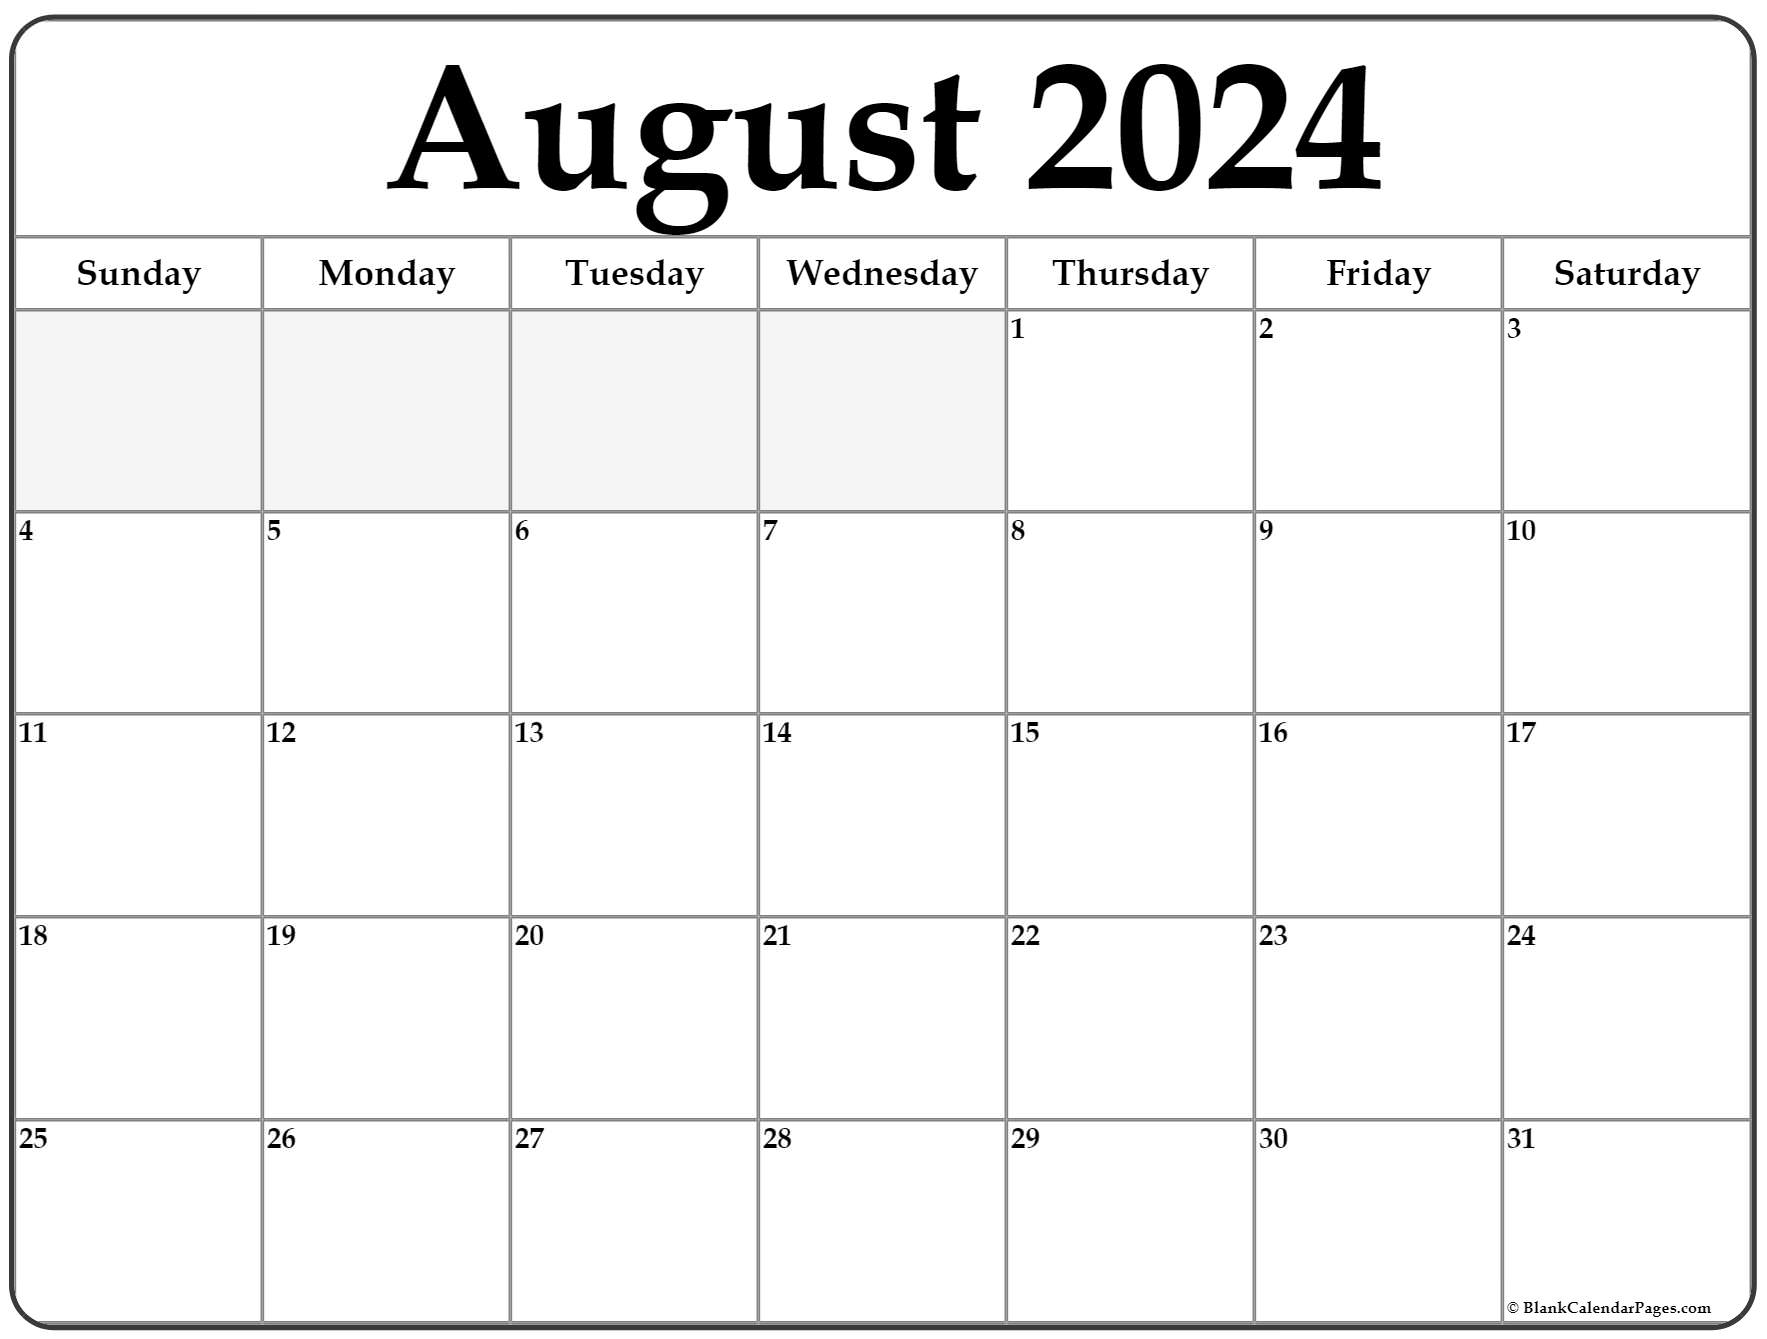 Monthly Calendar August 2022 August 2022 Calendar | Free Printable Calendar Templates